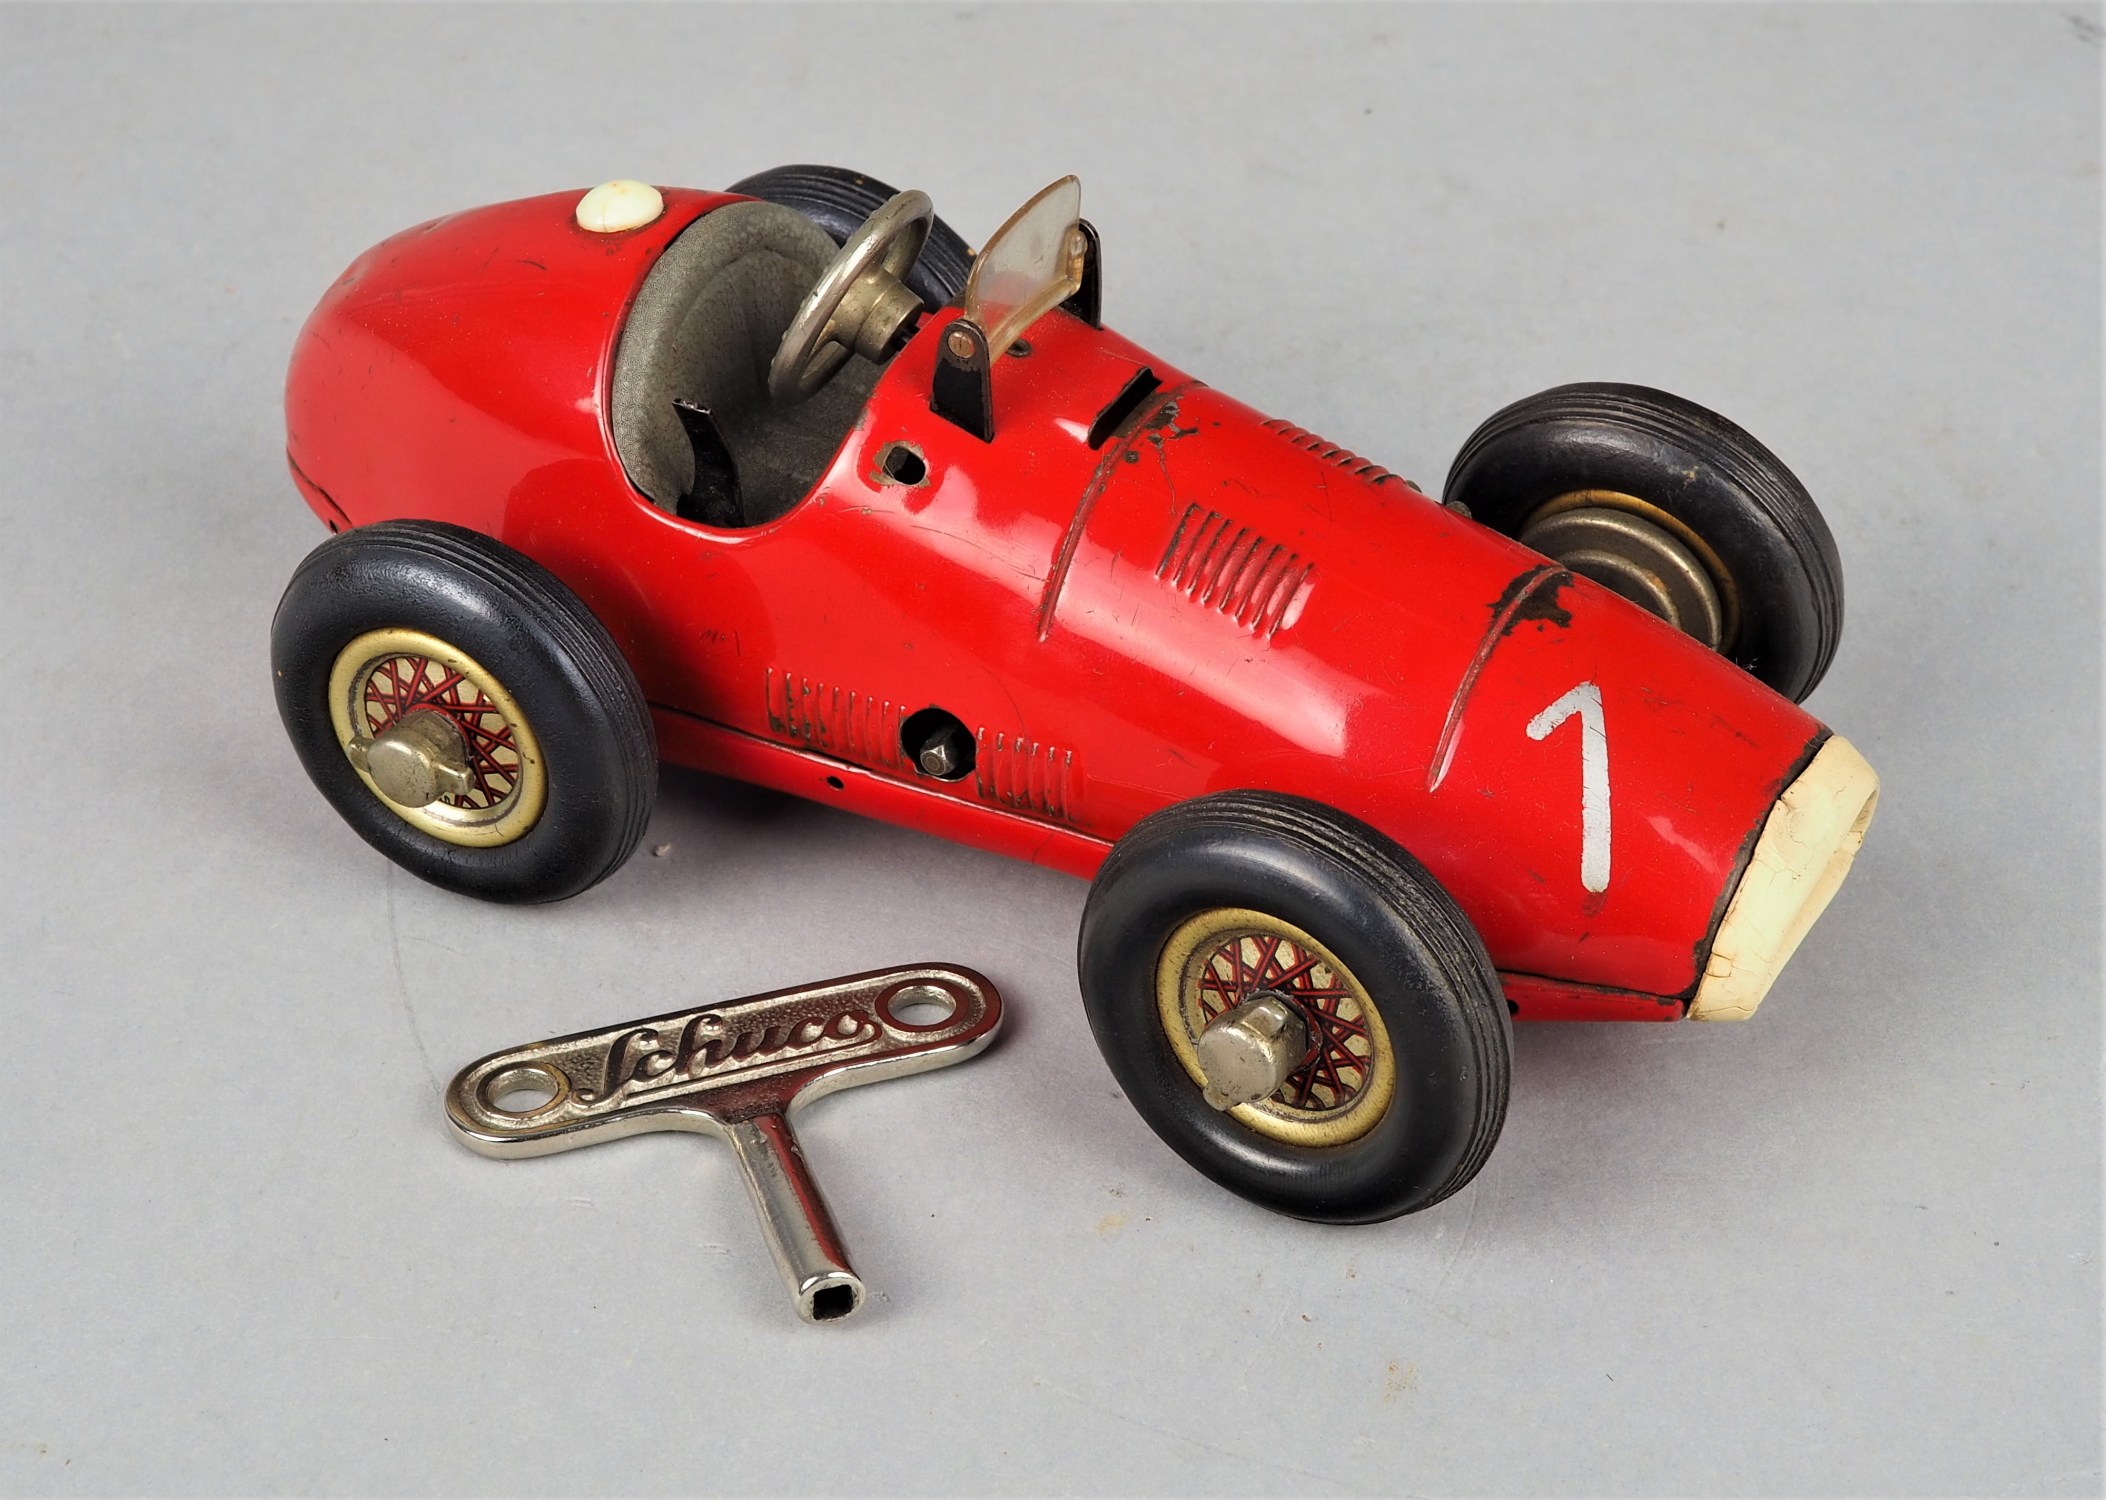 Schuco "Grand Prix Racer", 1949 - Image 2 of 3